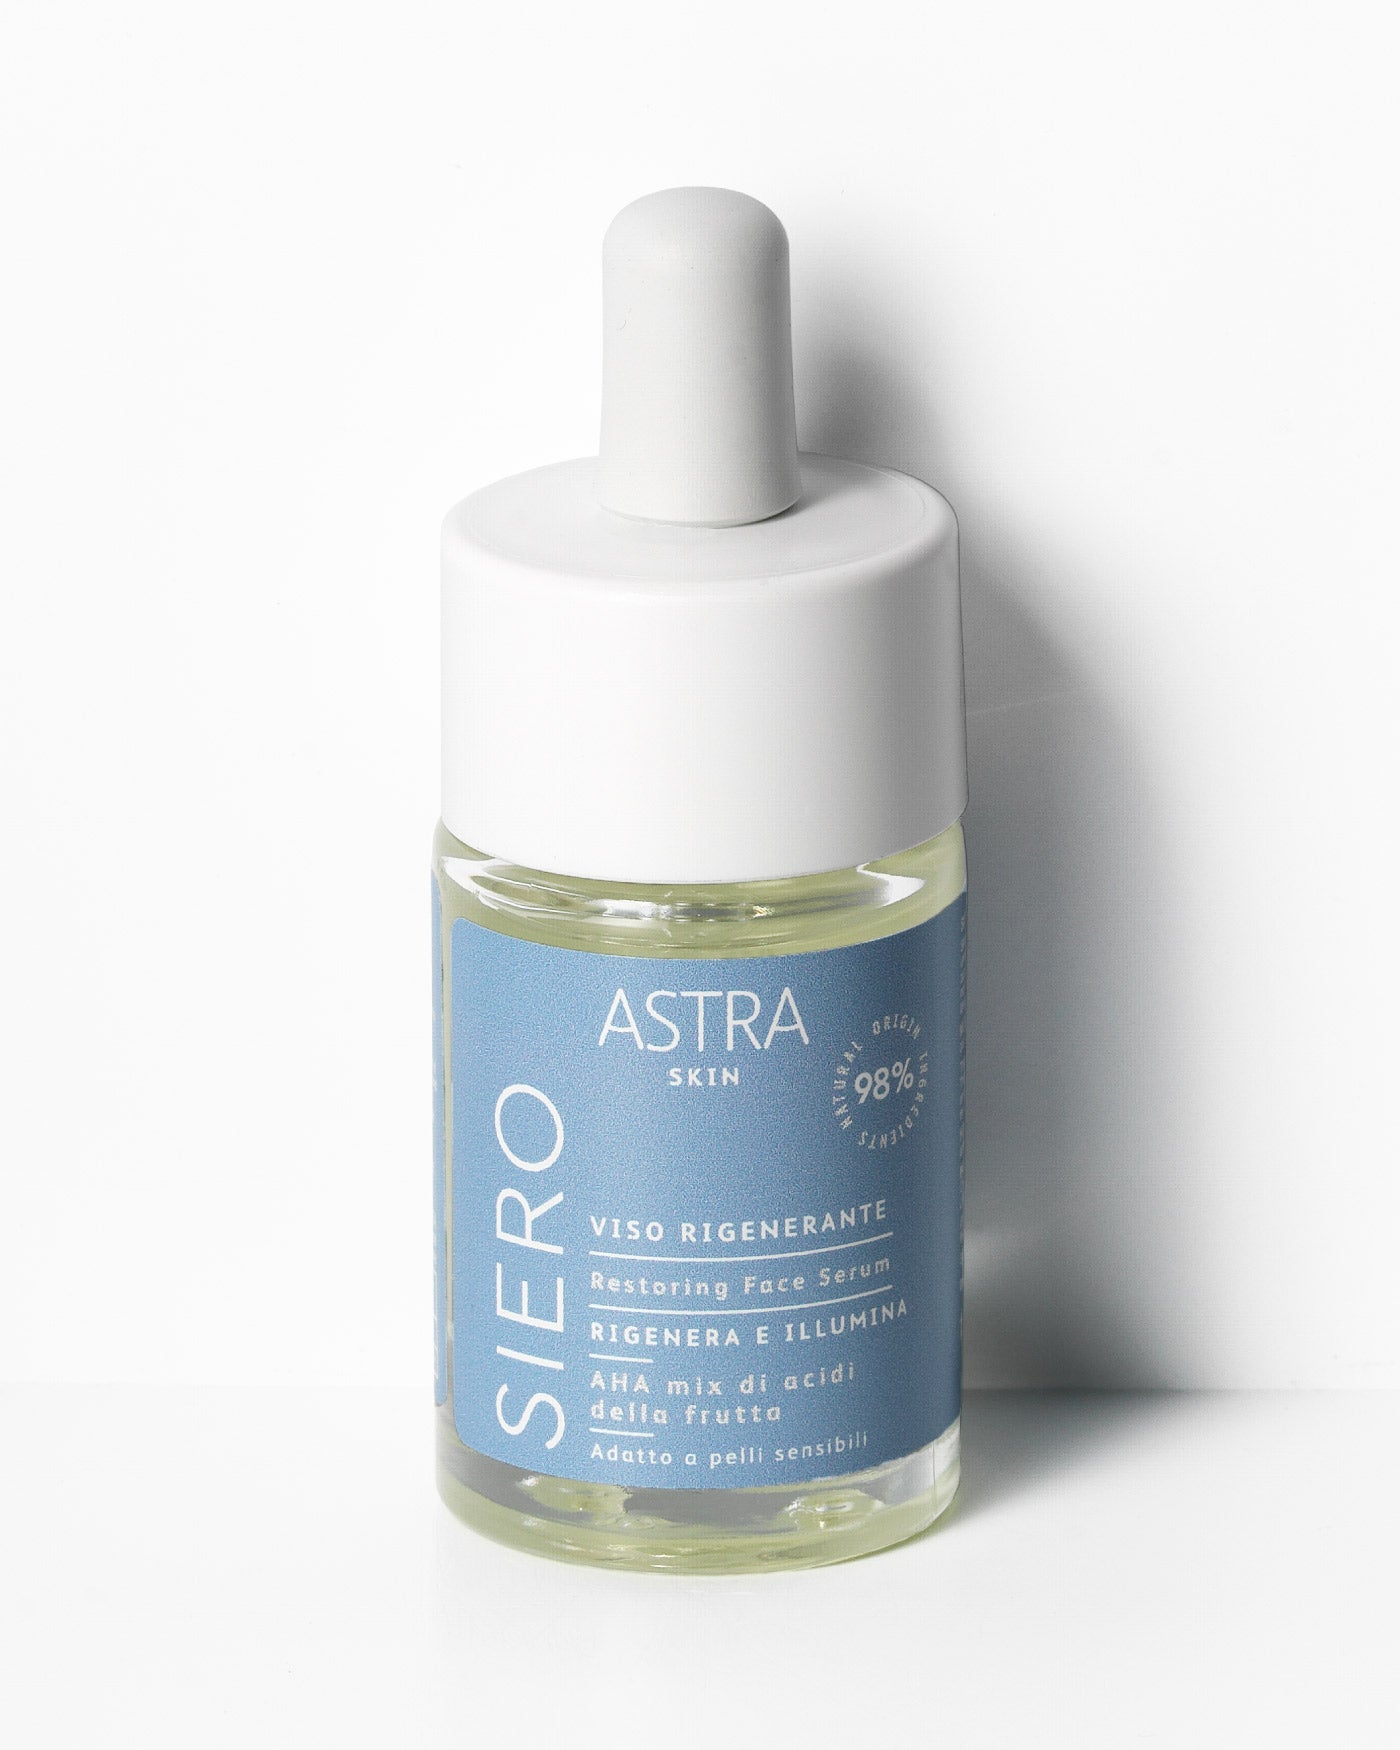 SIERO VISO RIGENERANTE - All Products - Astra Make-Up